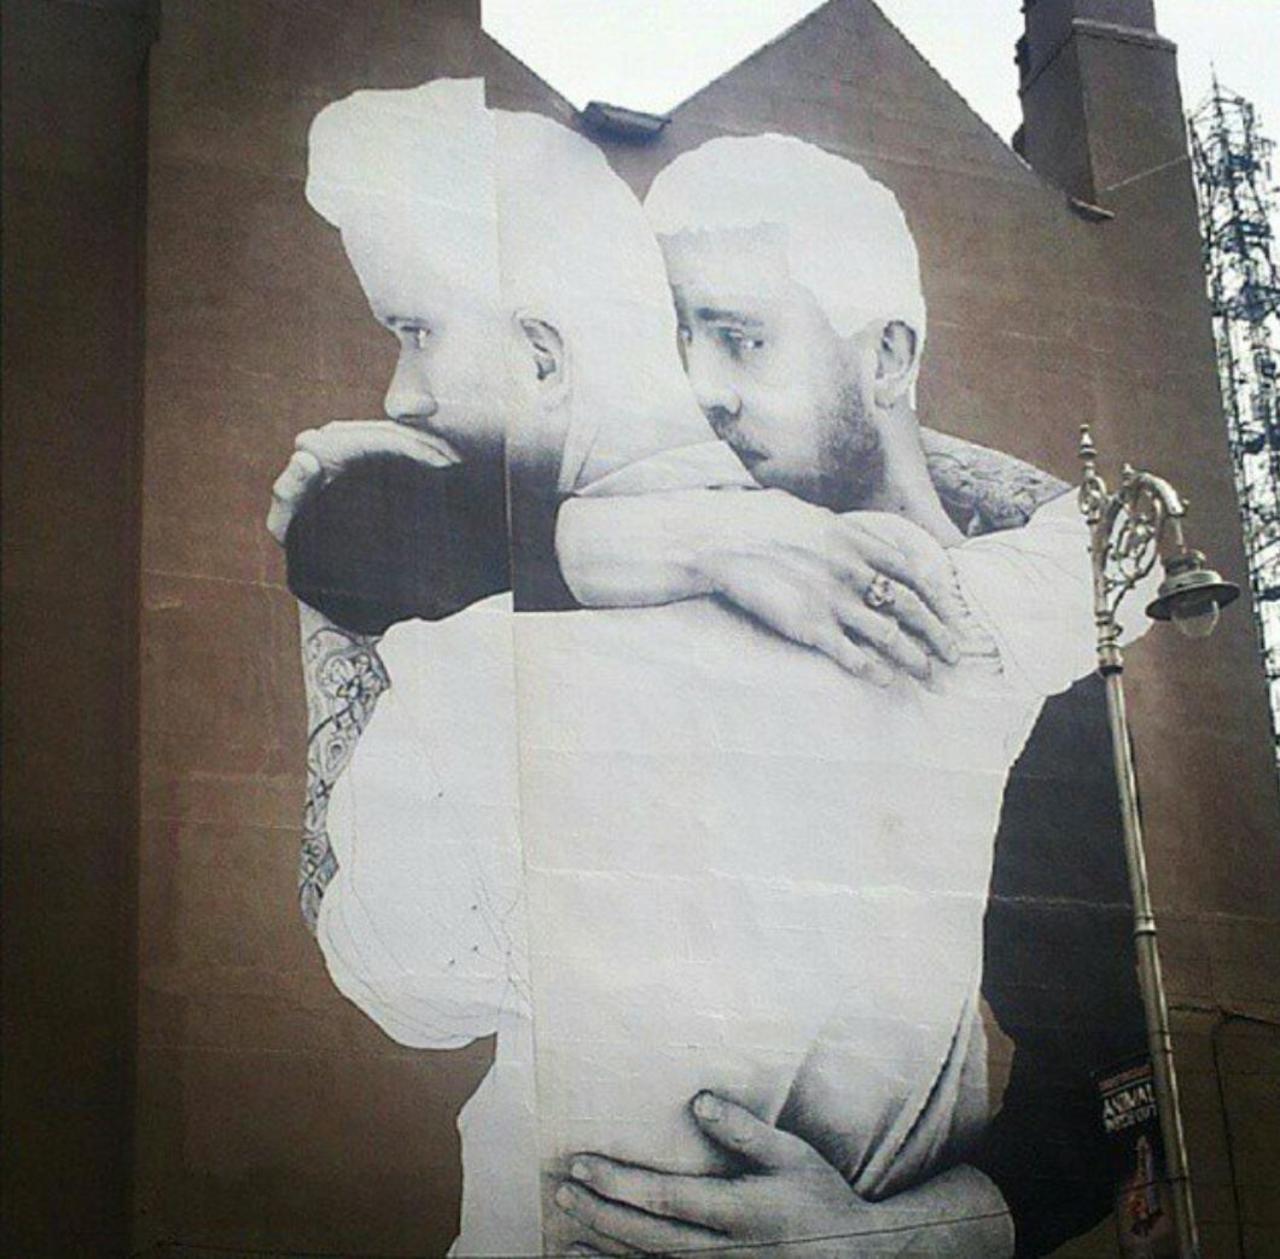 #BuenosDias #GoodMorning
#LoveIsInTheAir #StreetArt #ArteUrbano #Art #Arte #Mural #Graffiti #Men #Man #LGTB http://t.co/A08PEx9b0t